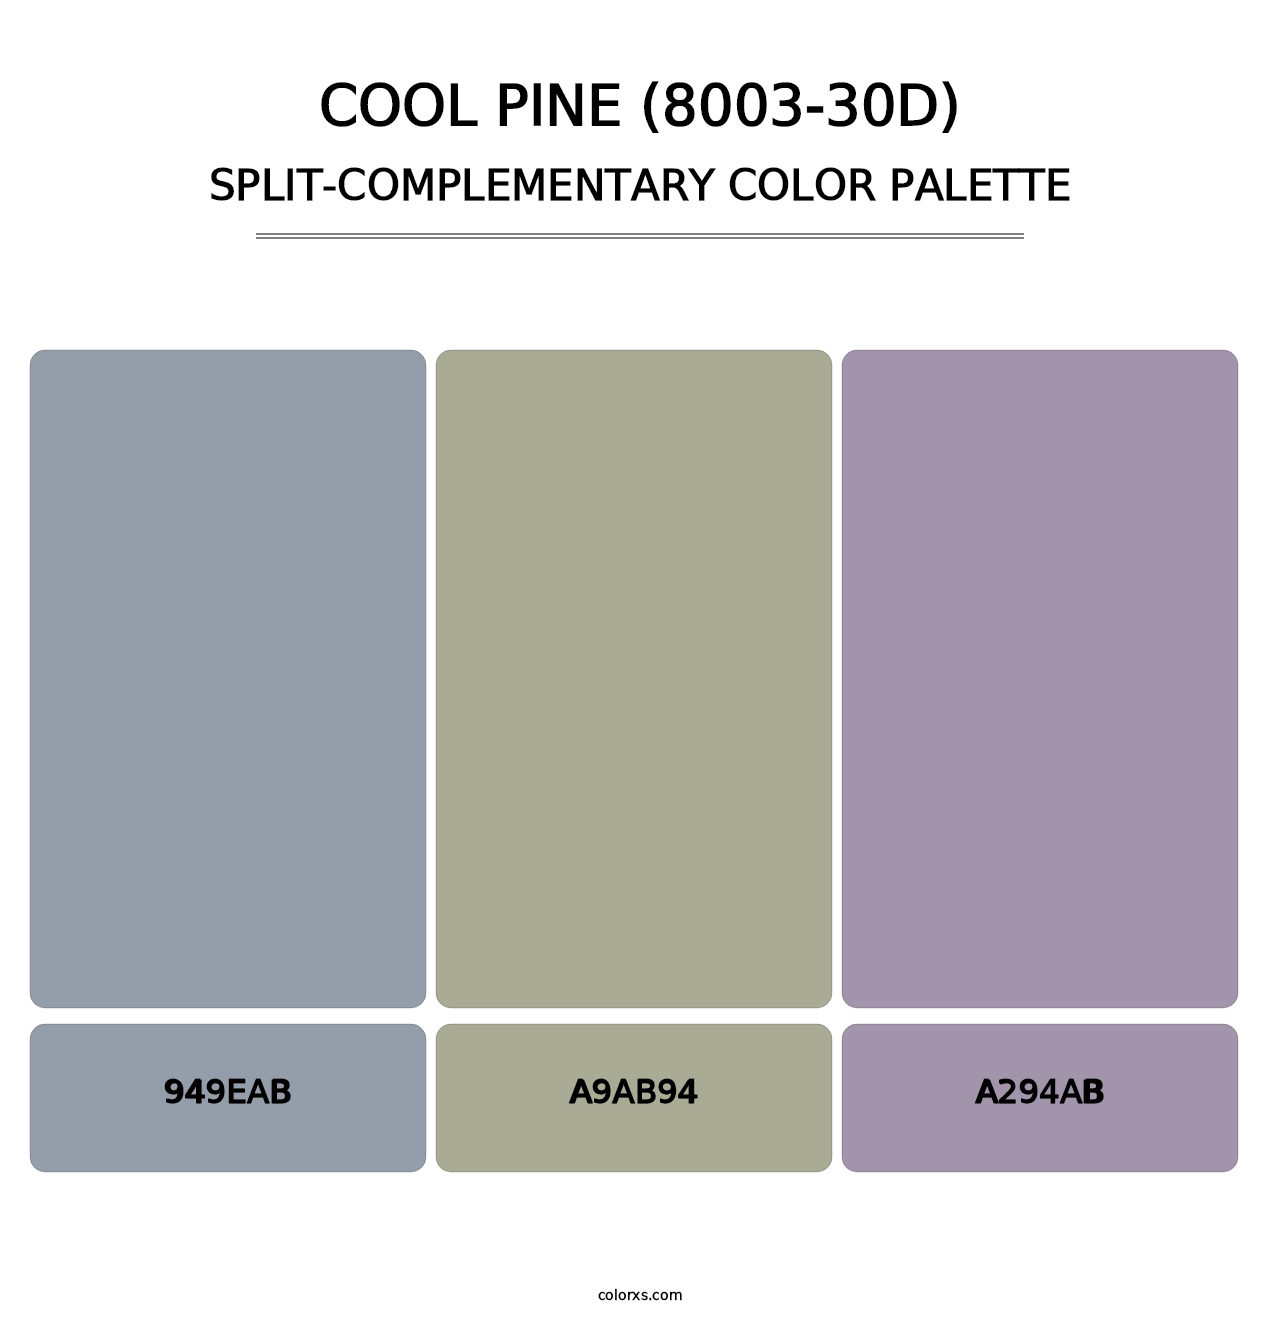 Cool Pine (8003-30D) - Split-Complementary Color Palette